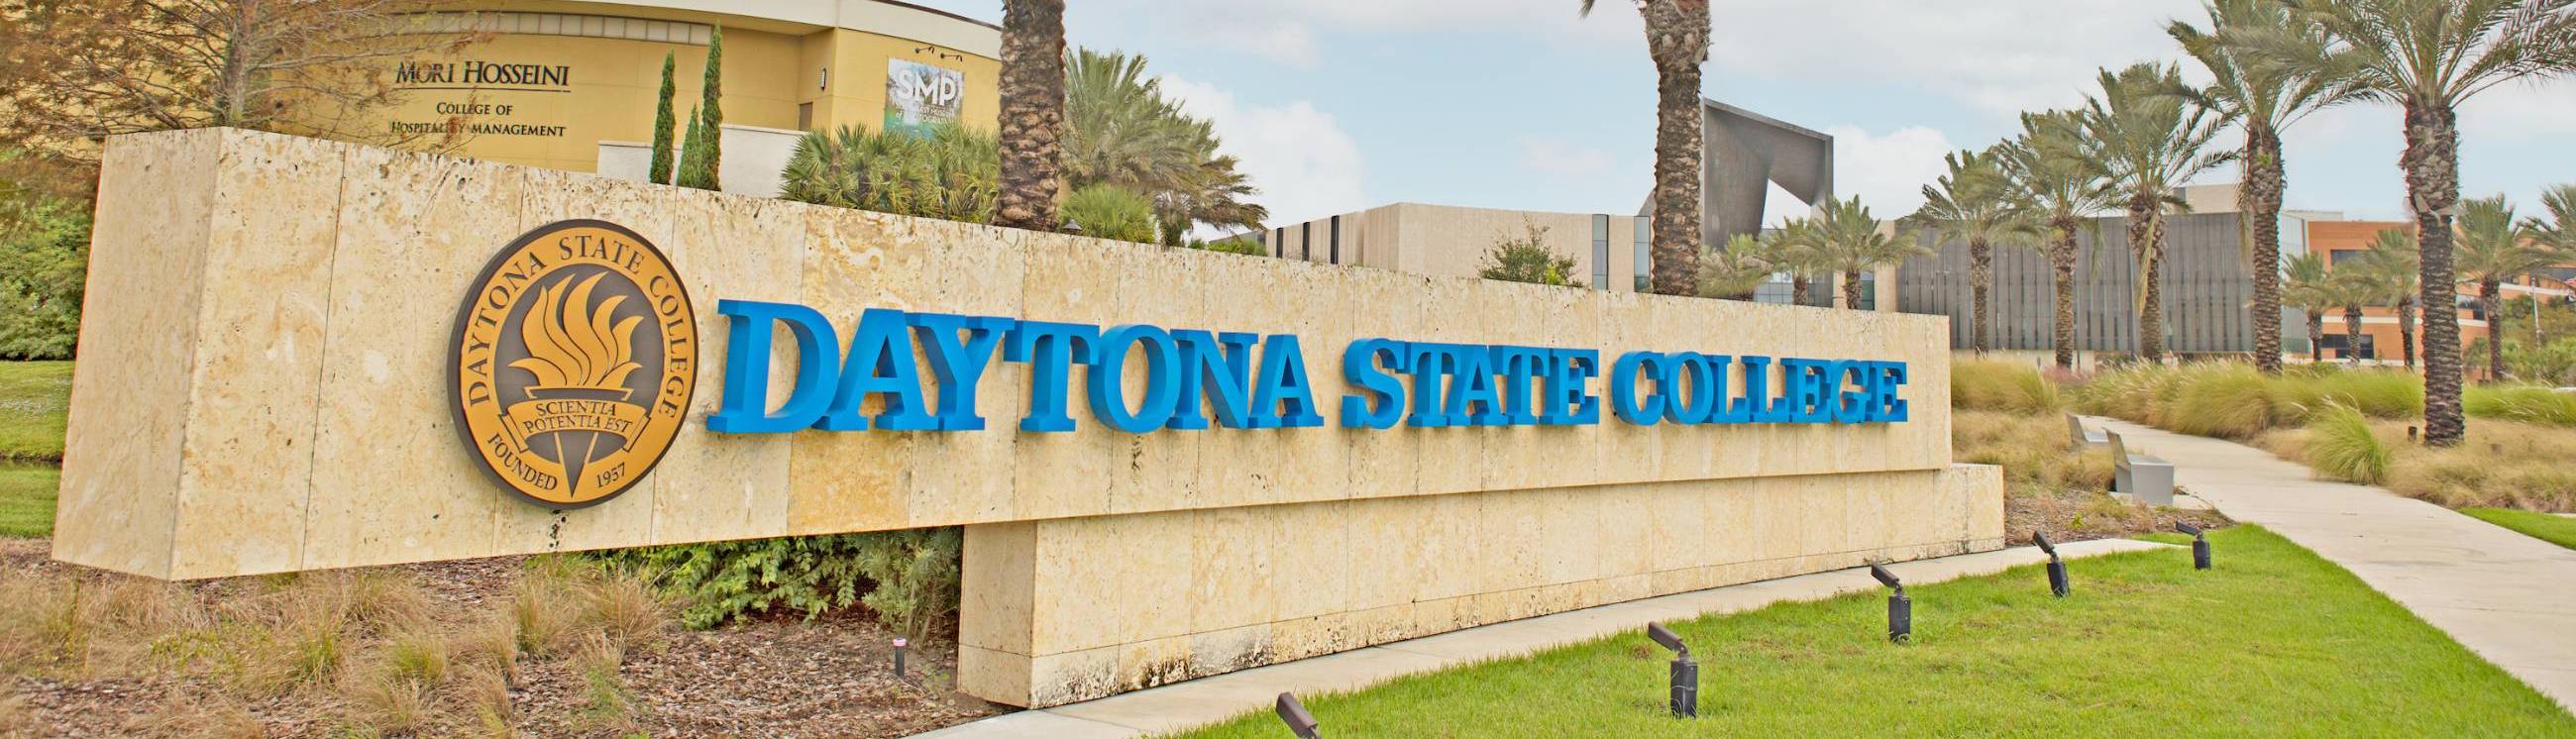 Daytona Beach Campus entrance